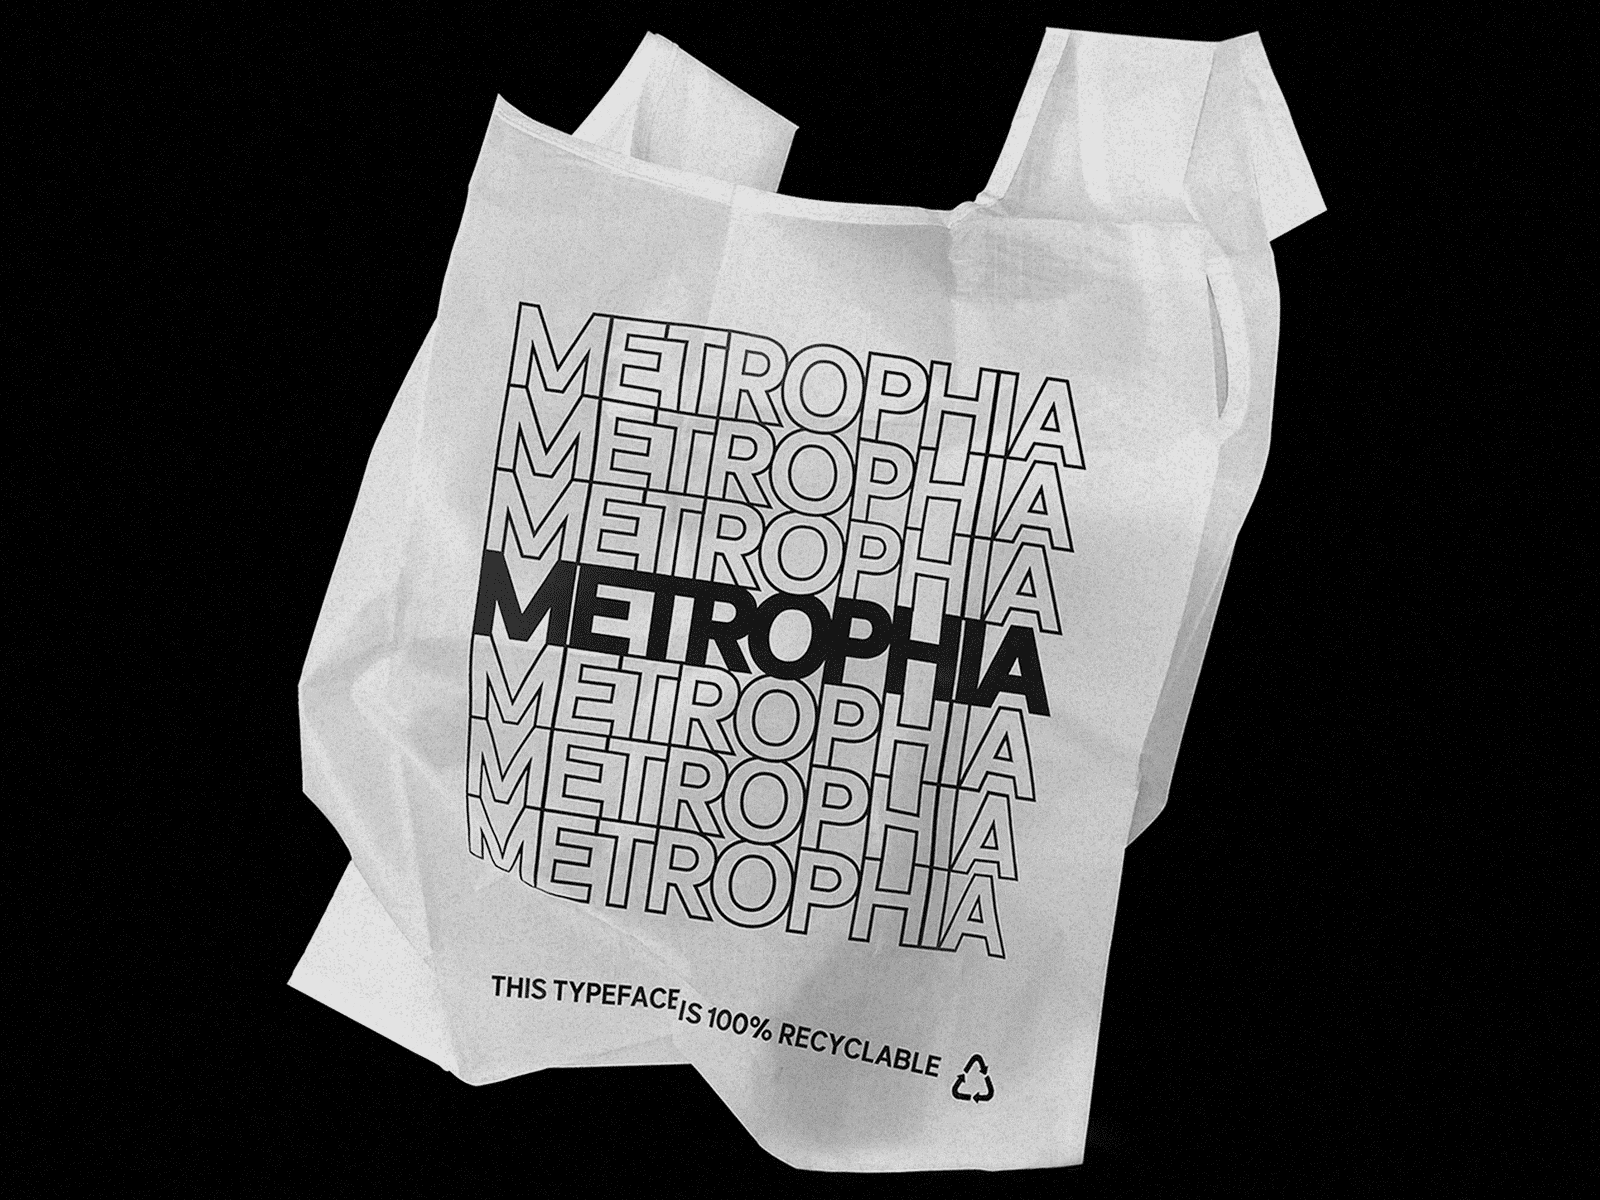 Metrophia Metrophia Metrophia